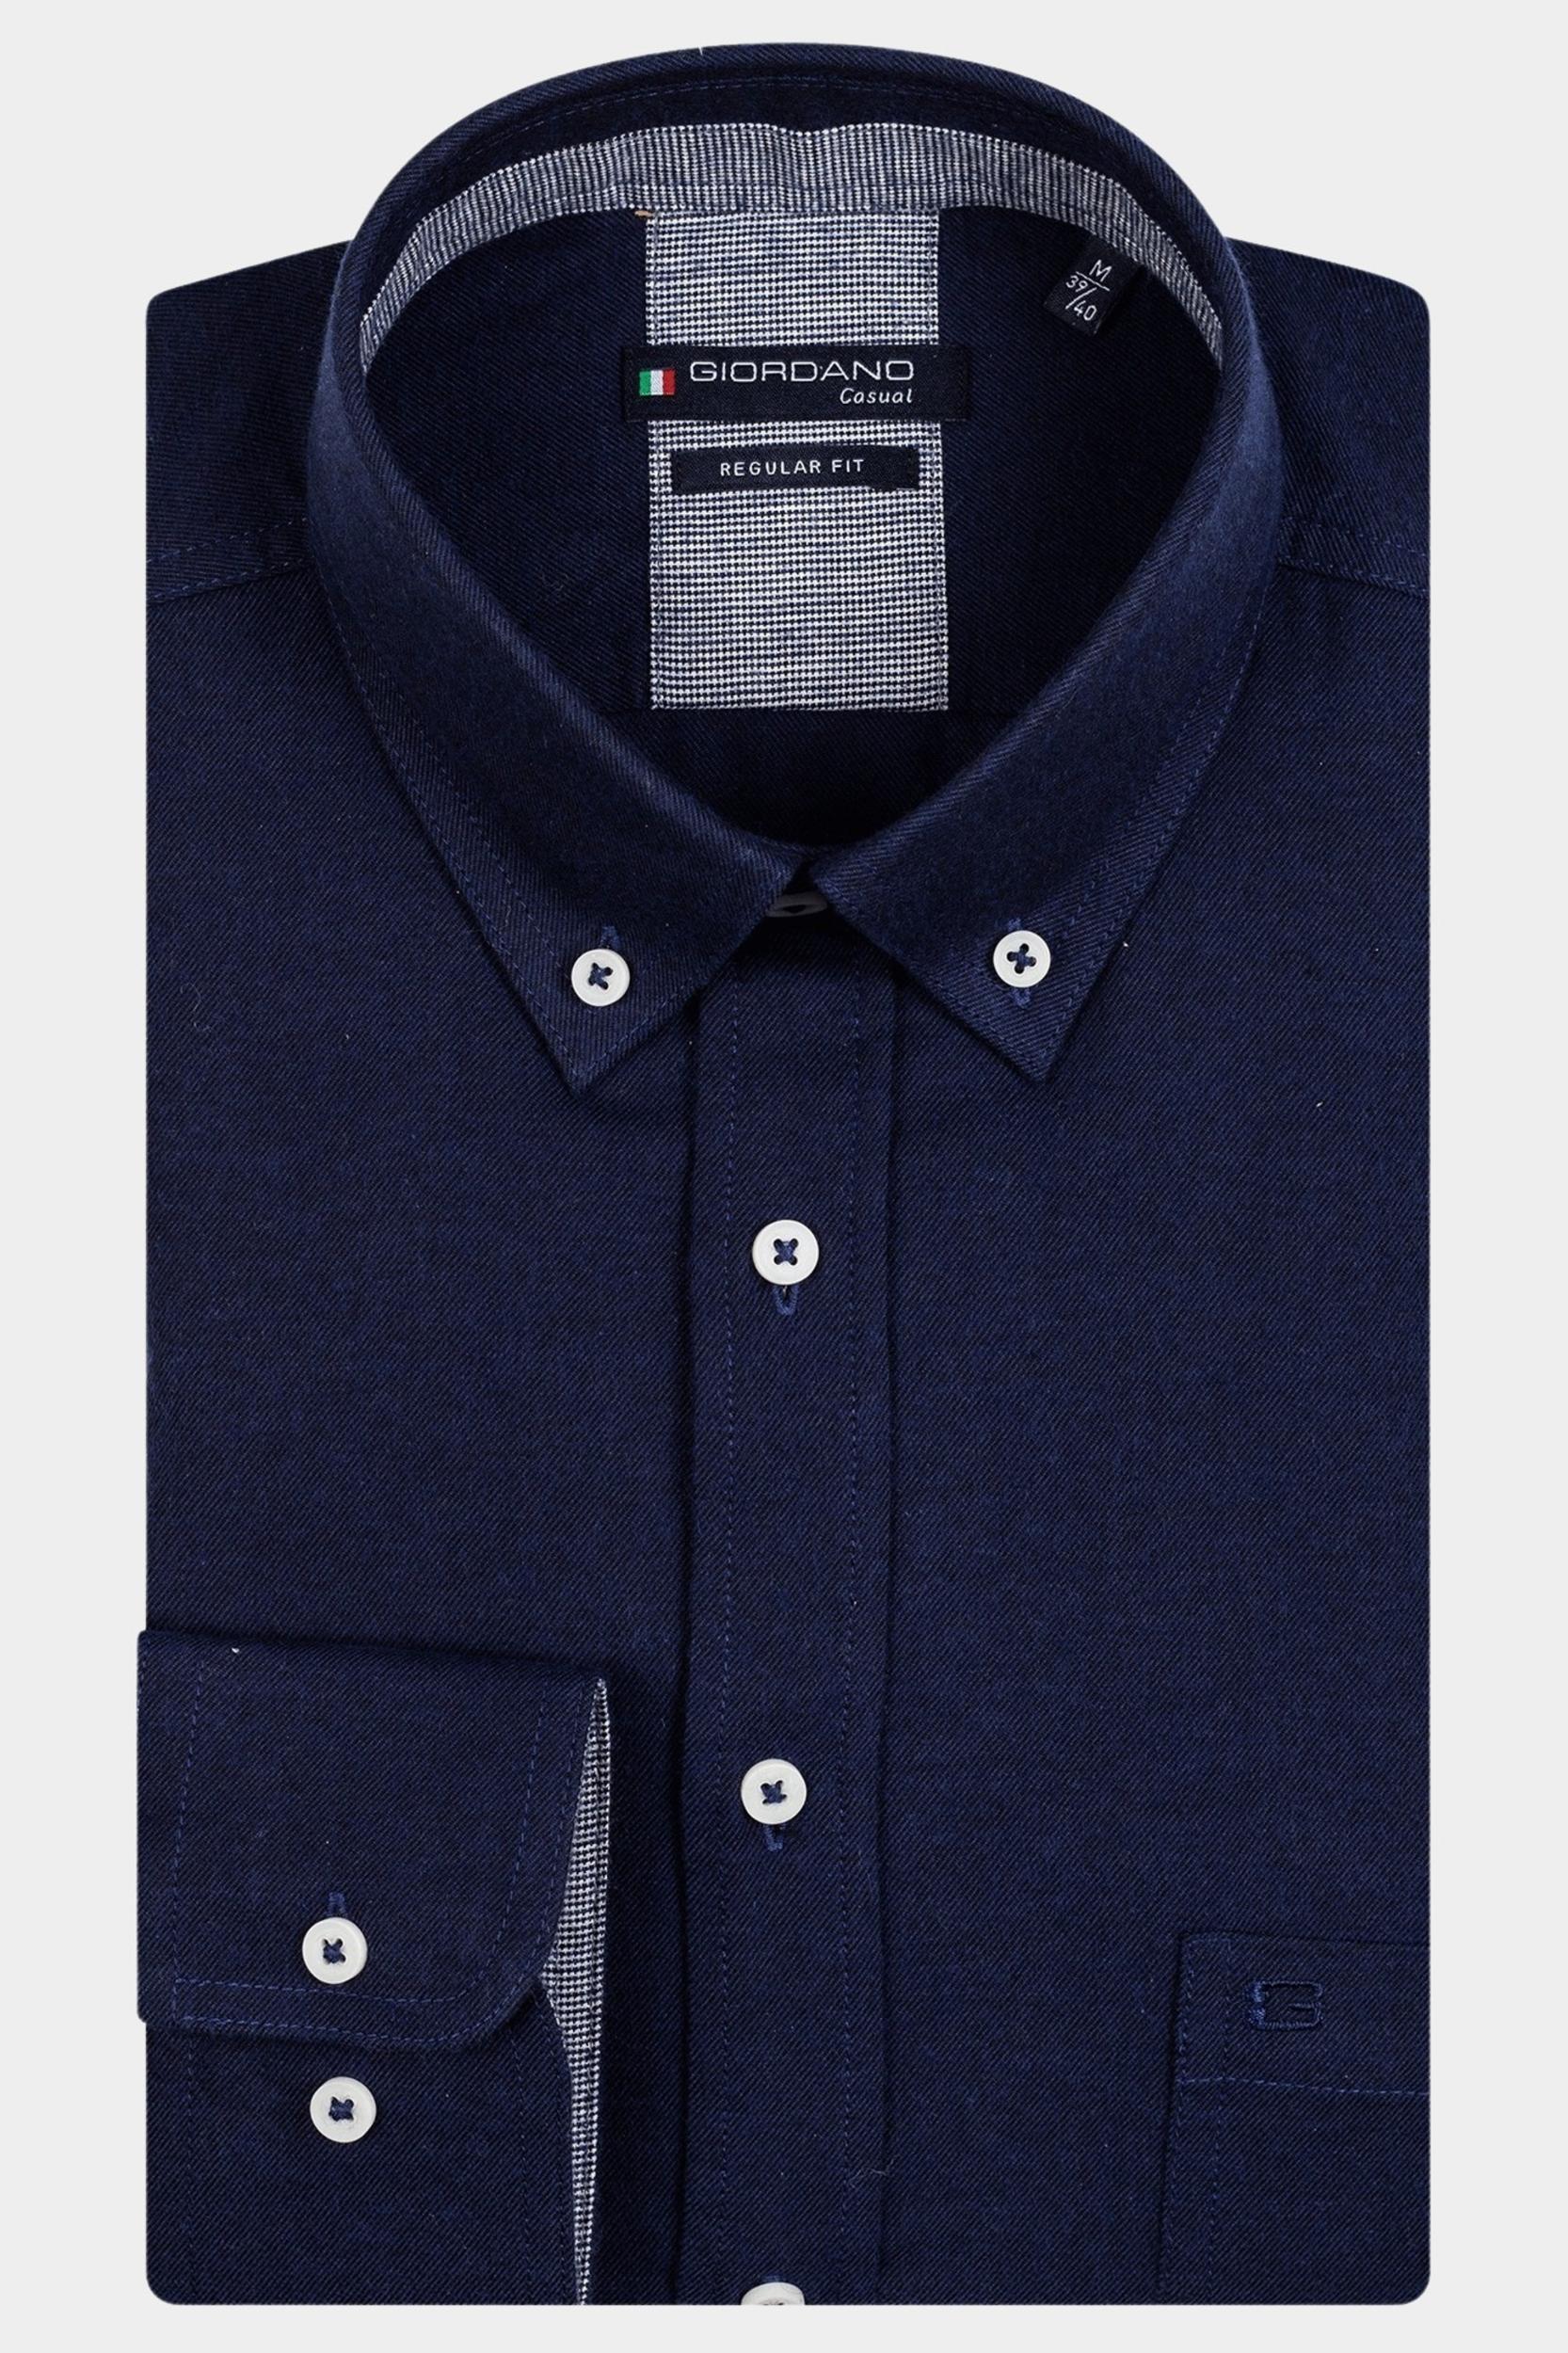 Giordano Casual hemd lange mouw Blauw Ivy, LS Button Down 327003/60